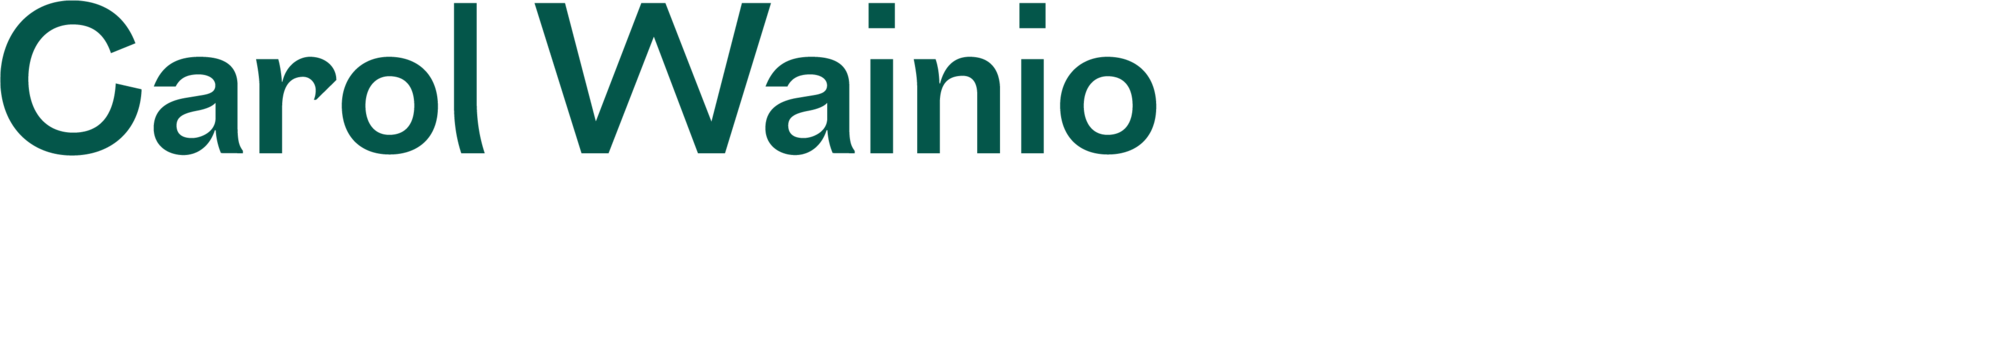 Logo d'exposition Carol Wainio